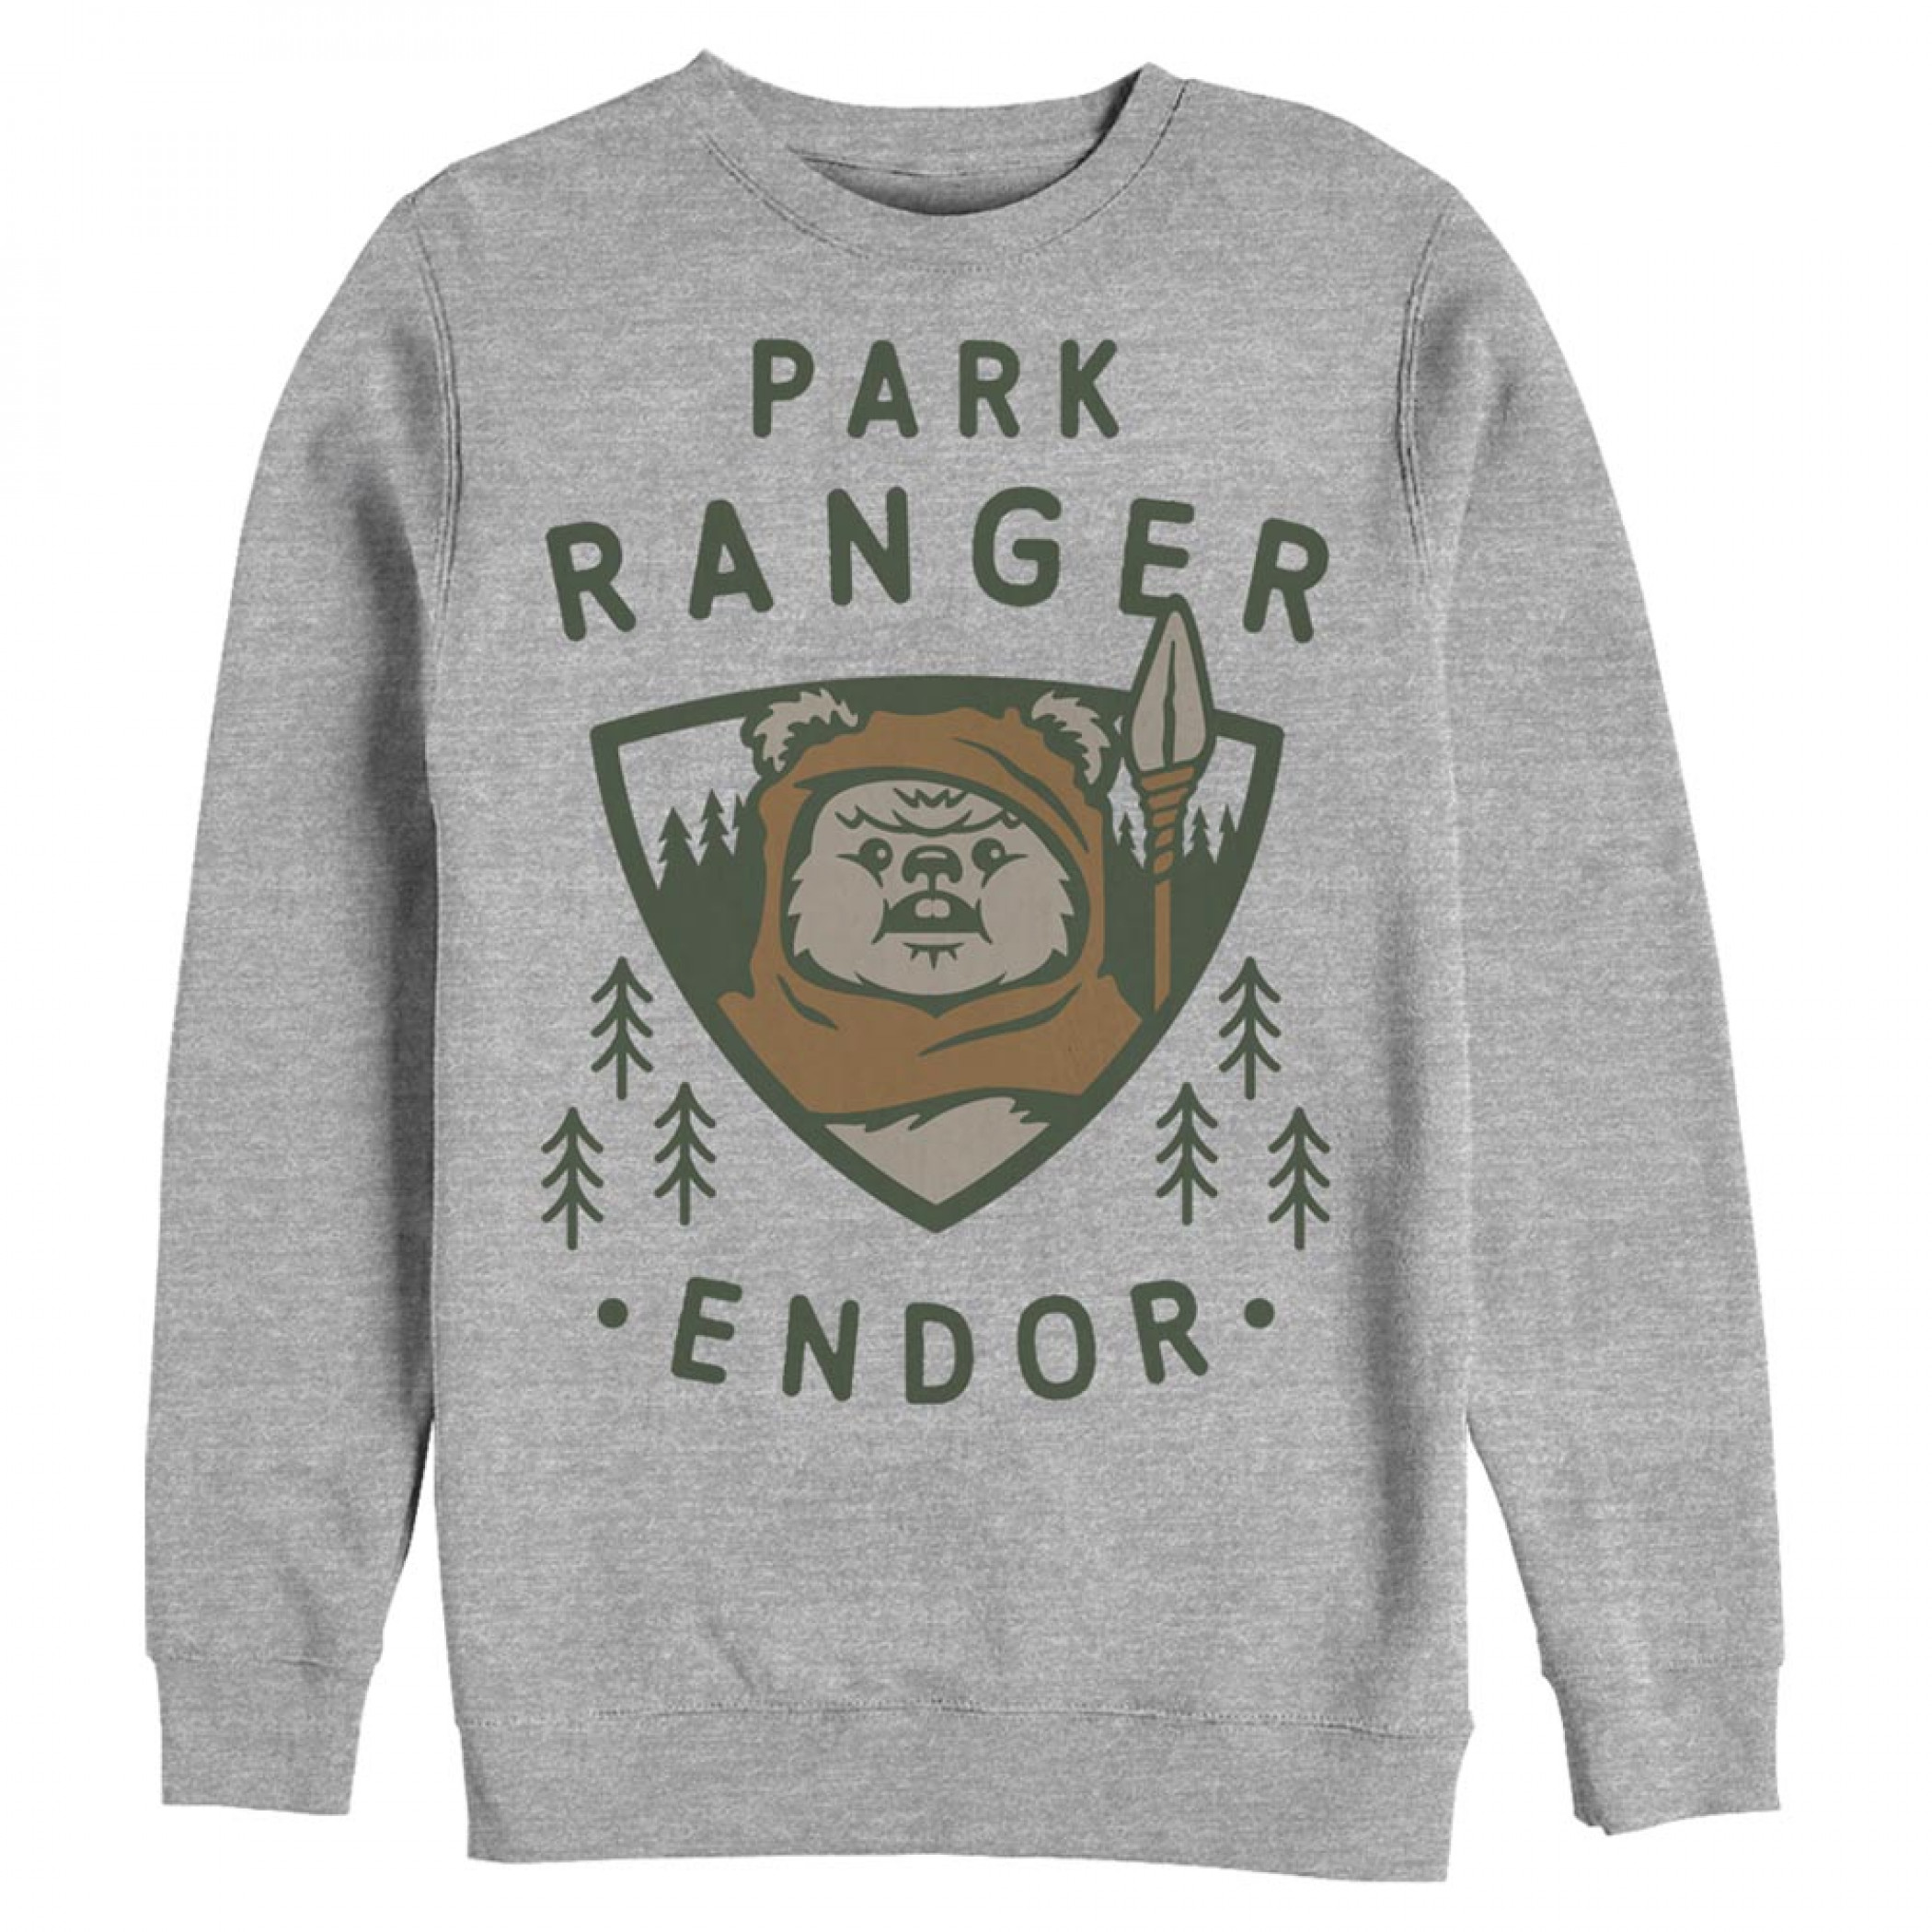 Star Wars Endor Park Ranger Sweatshirt